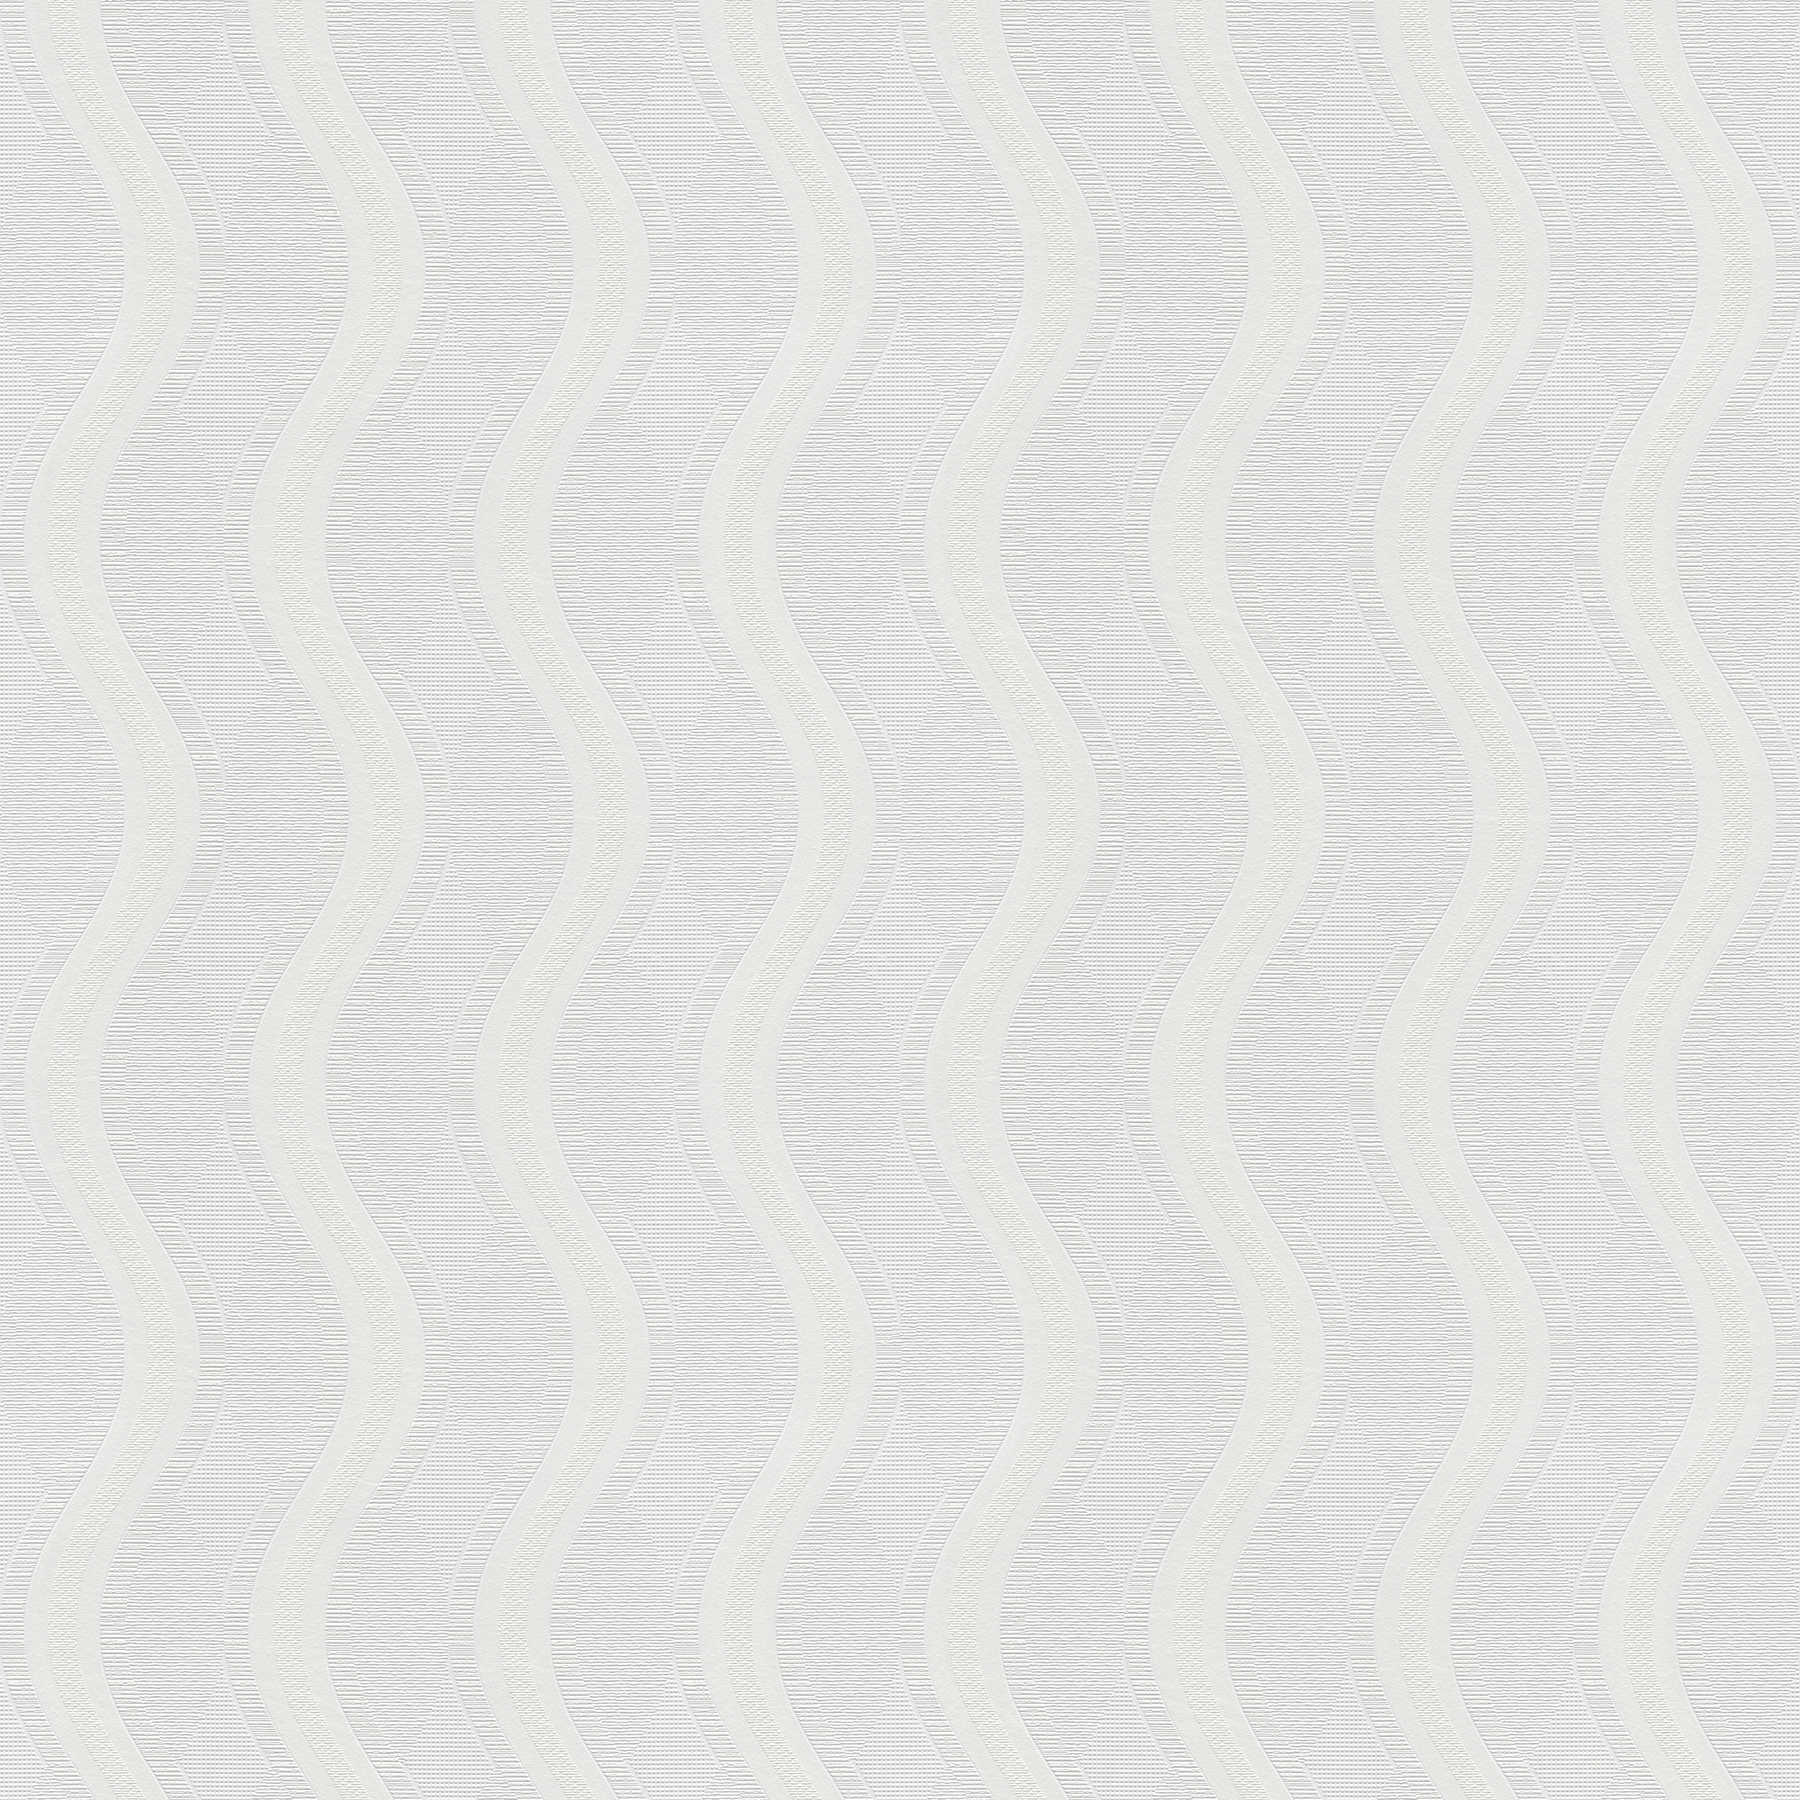 Retro wallpaper white with geometric wave pattern - white
